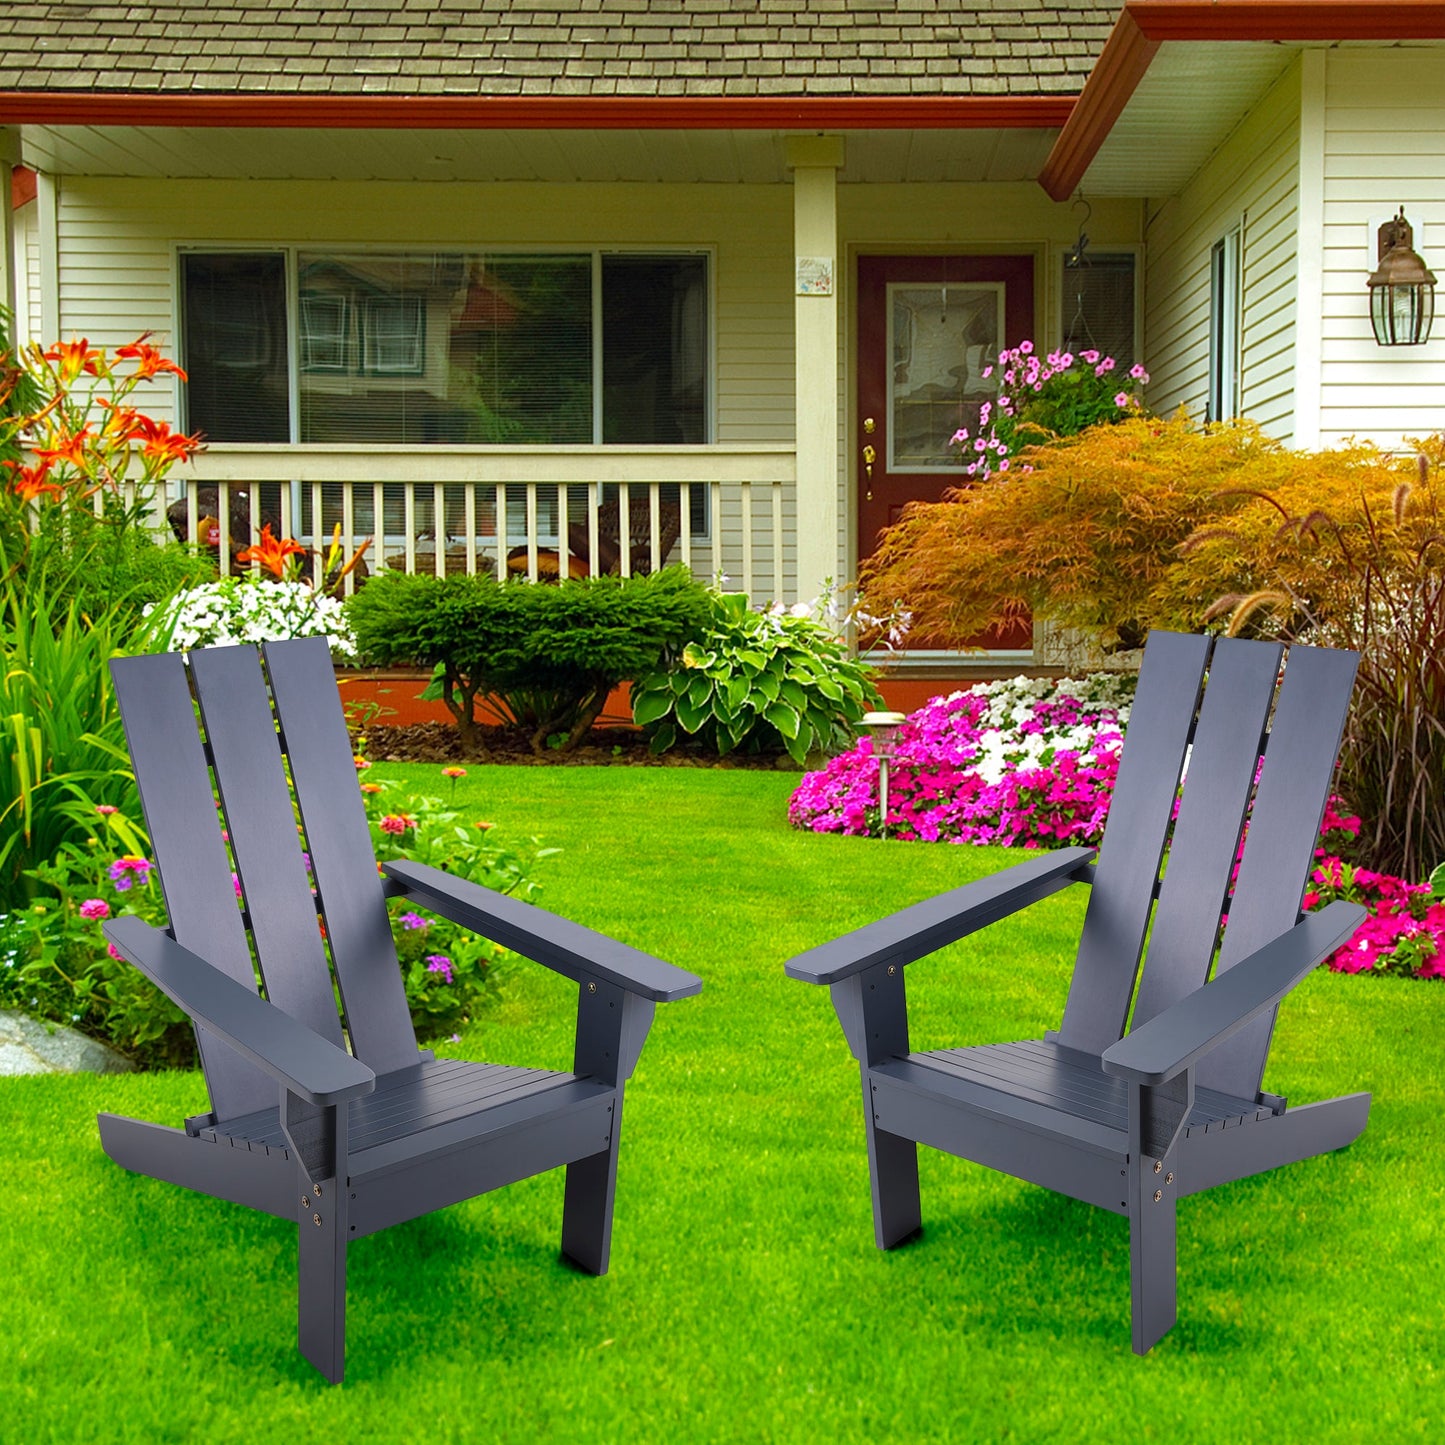 Sophia & William 2 Piece Grey Patio Wooden Adirondack Chair Lounge Chair for Garden Beach Balcony Backyard Lawn